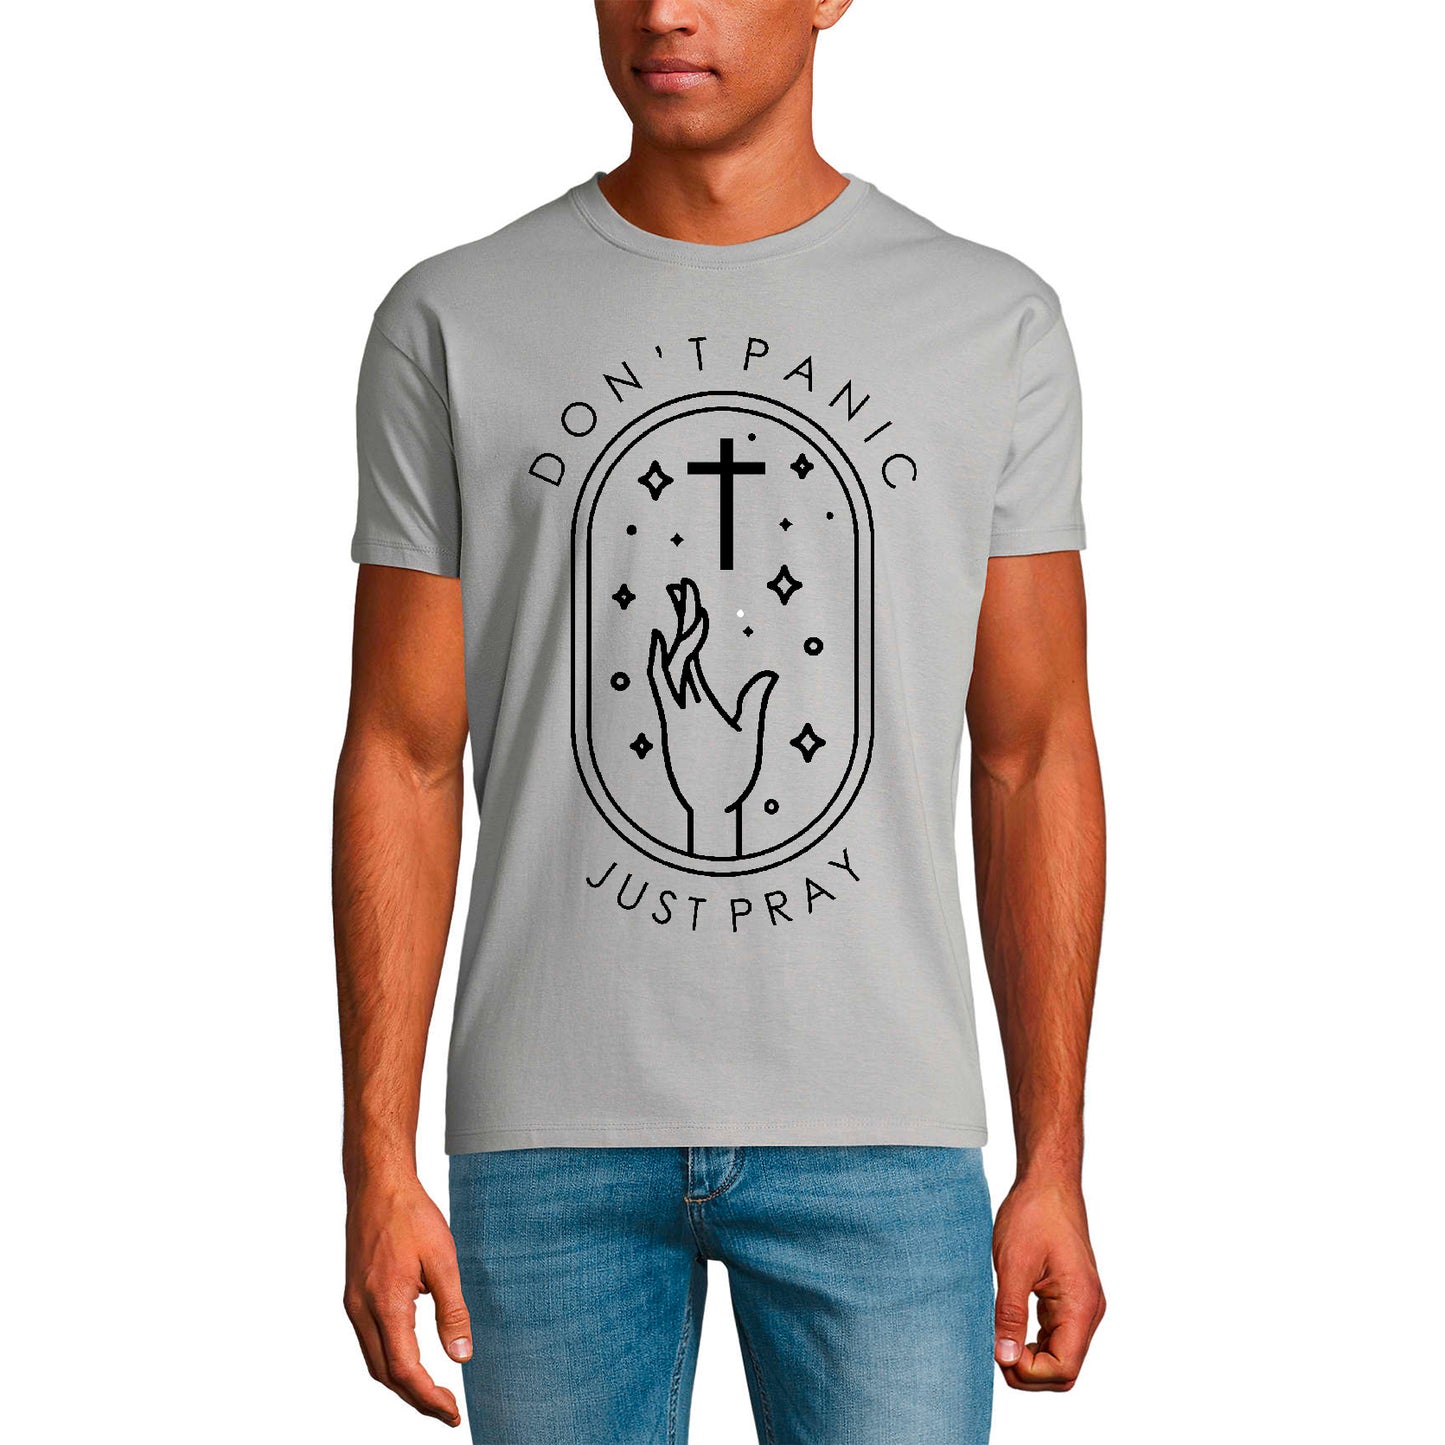 ULTRABASIC Herren-T-Shirt Don't Panic Just Pray – Christus-Bibel-Religionsshirt